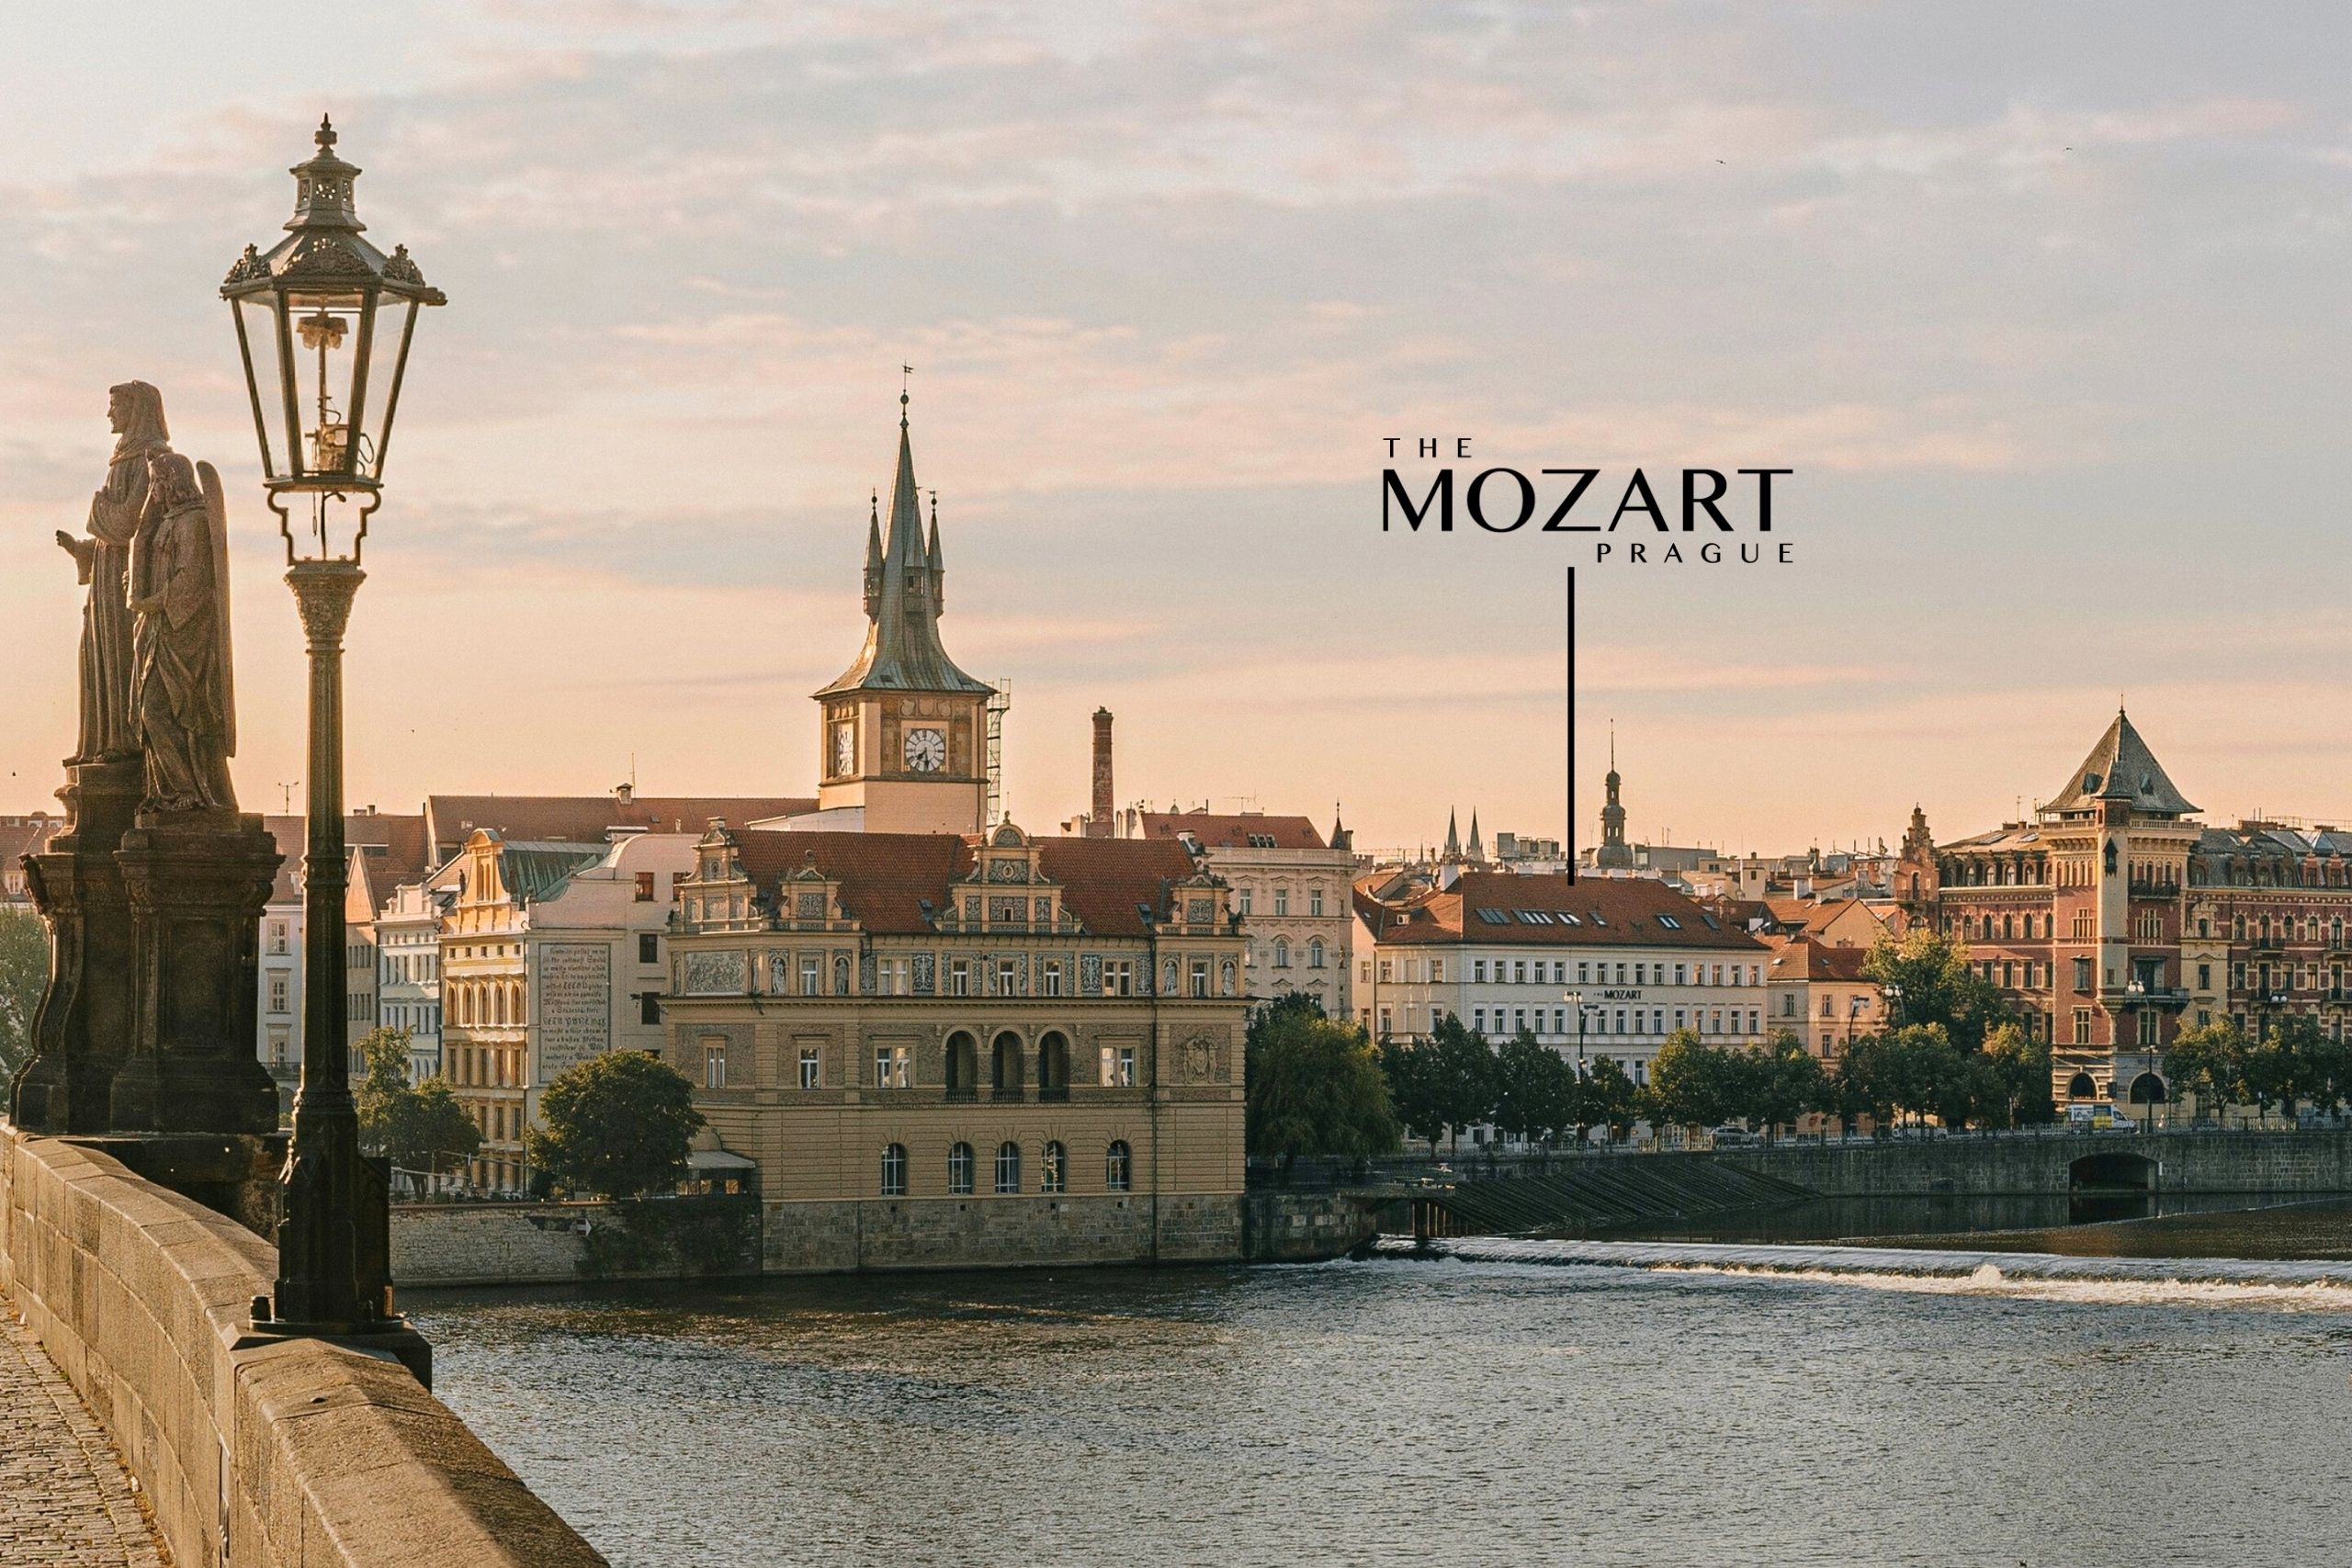 Mozart-prague-hotel-overview-from-charles-bridge-location